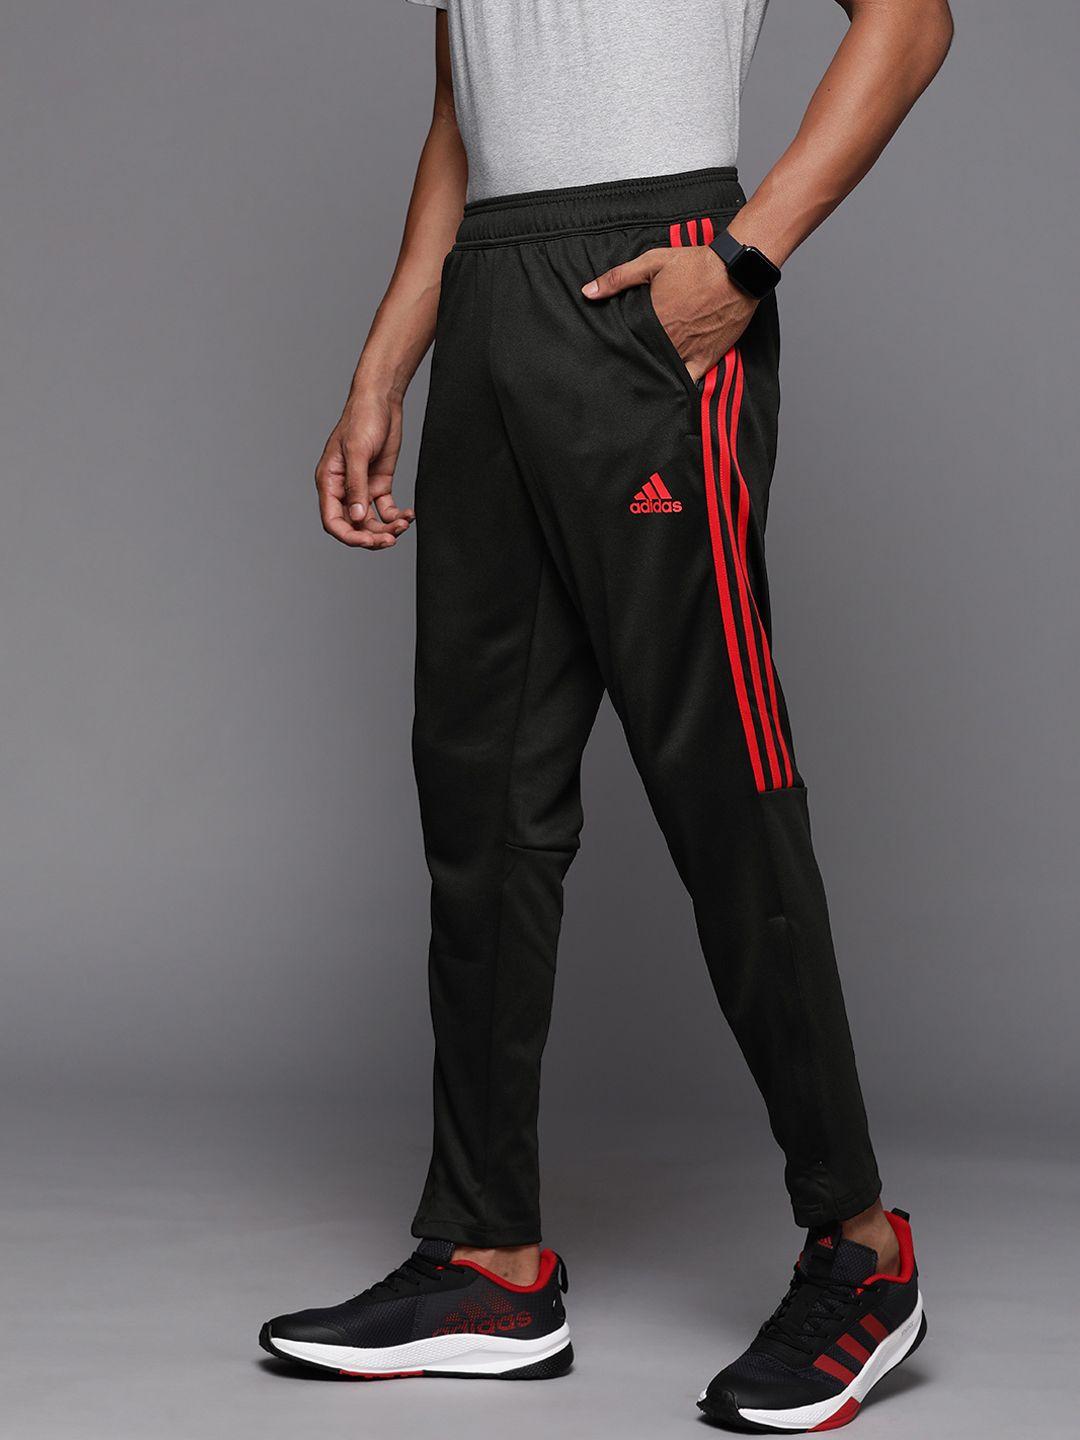 adidas men black & red sereno brand logo printed side striped track pants